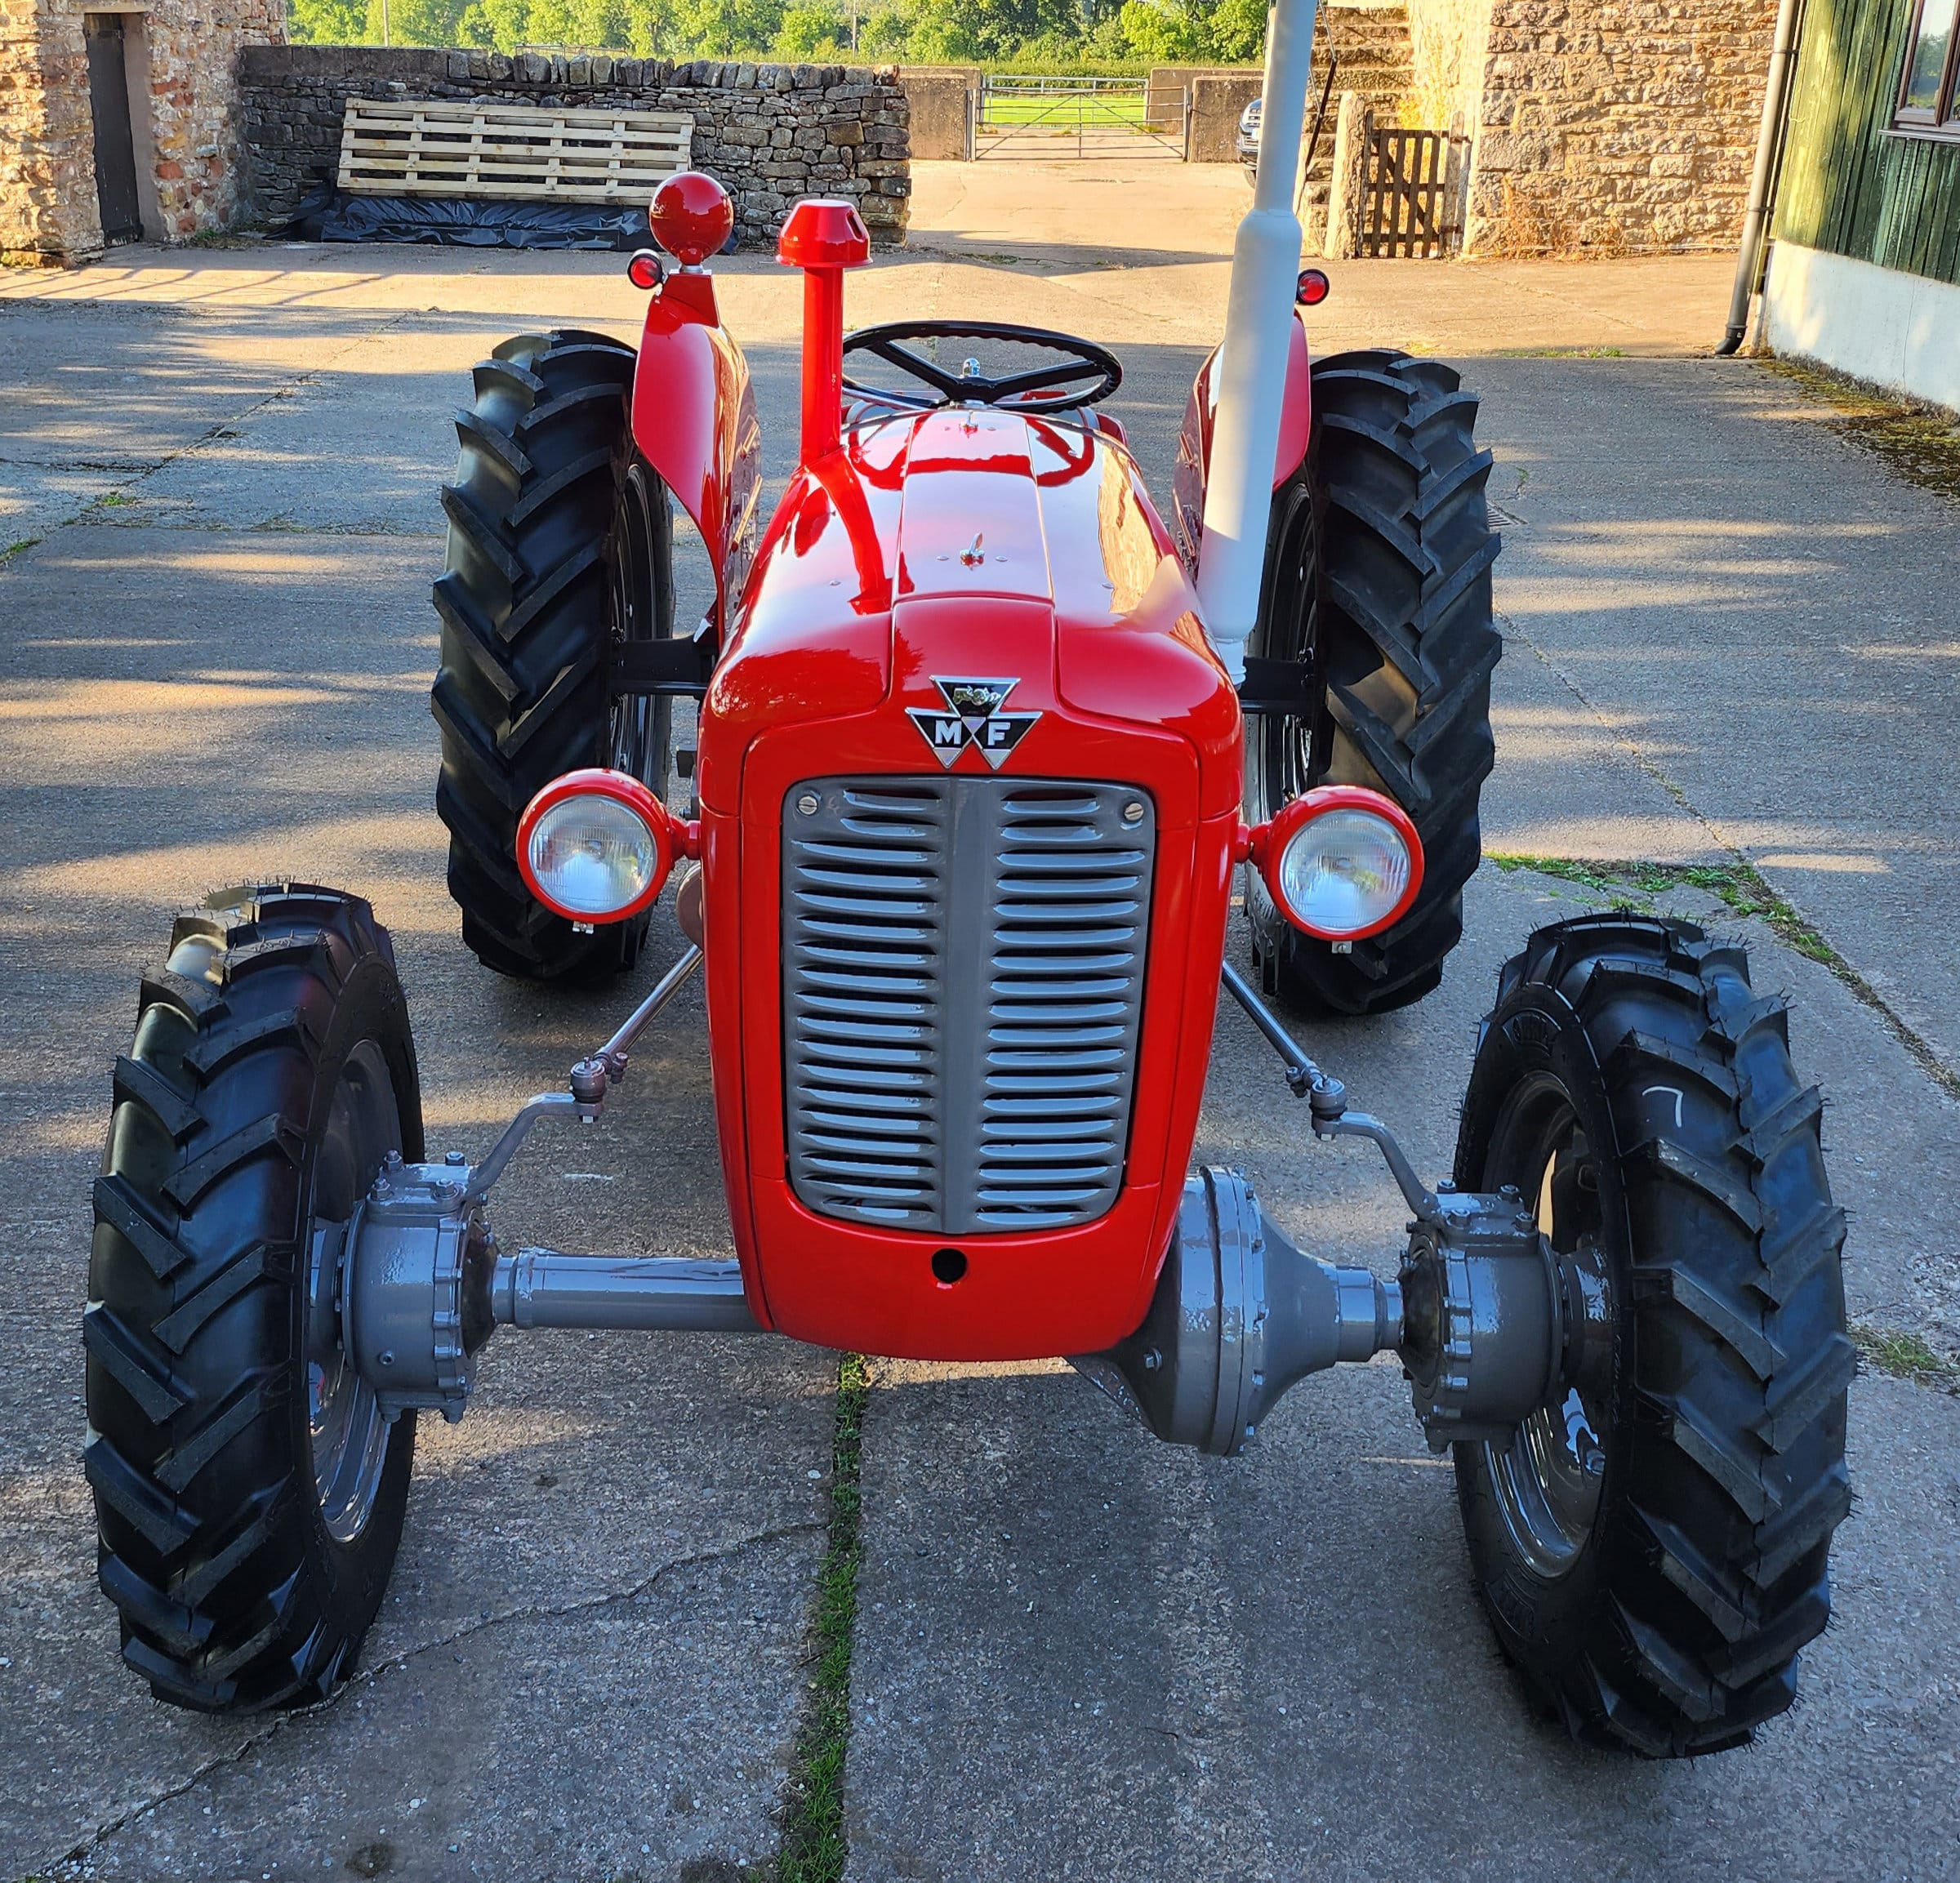 A red Massey Ferguson 35X Multi-Power tractor